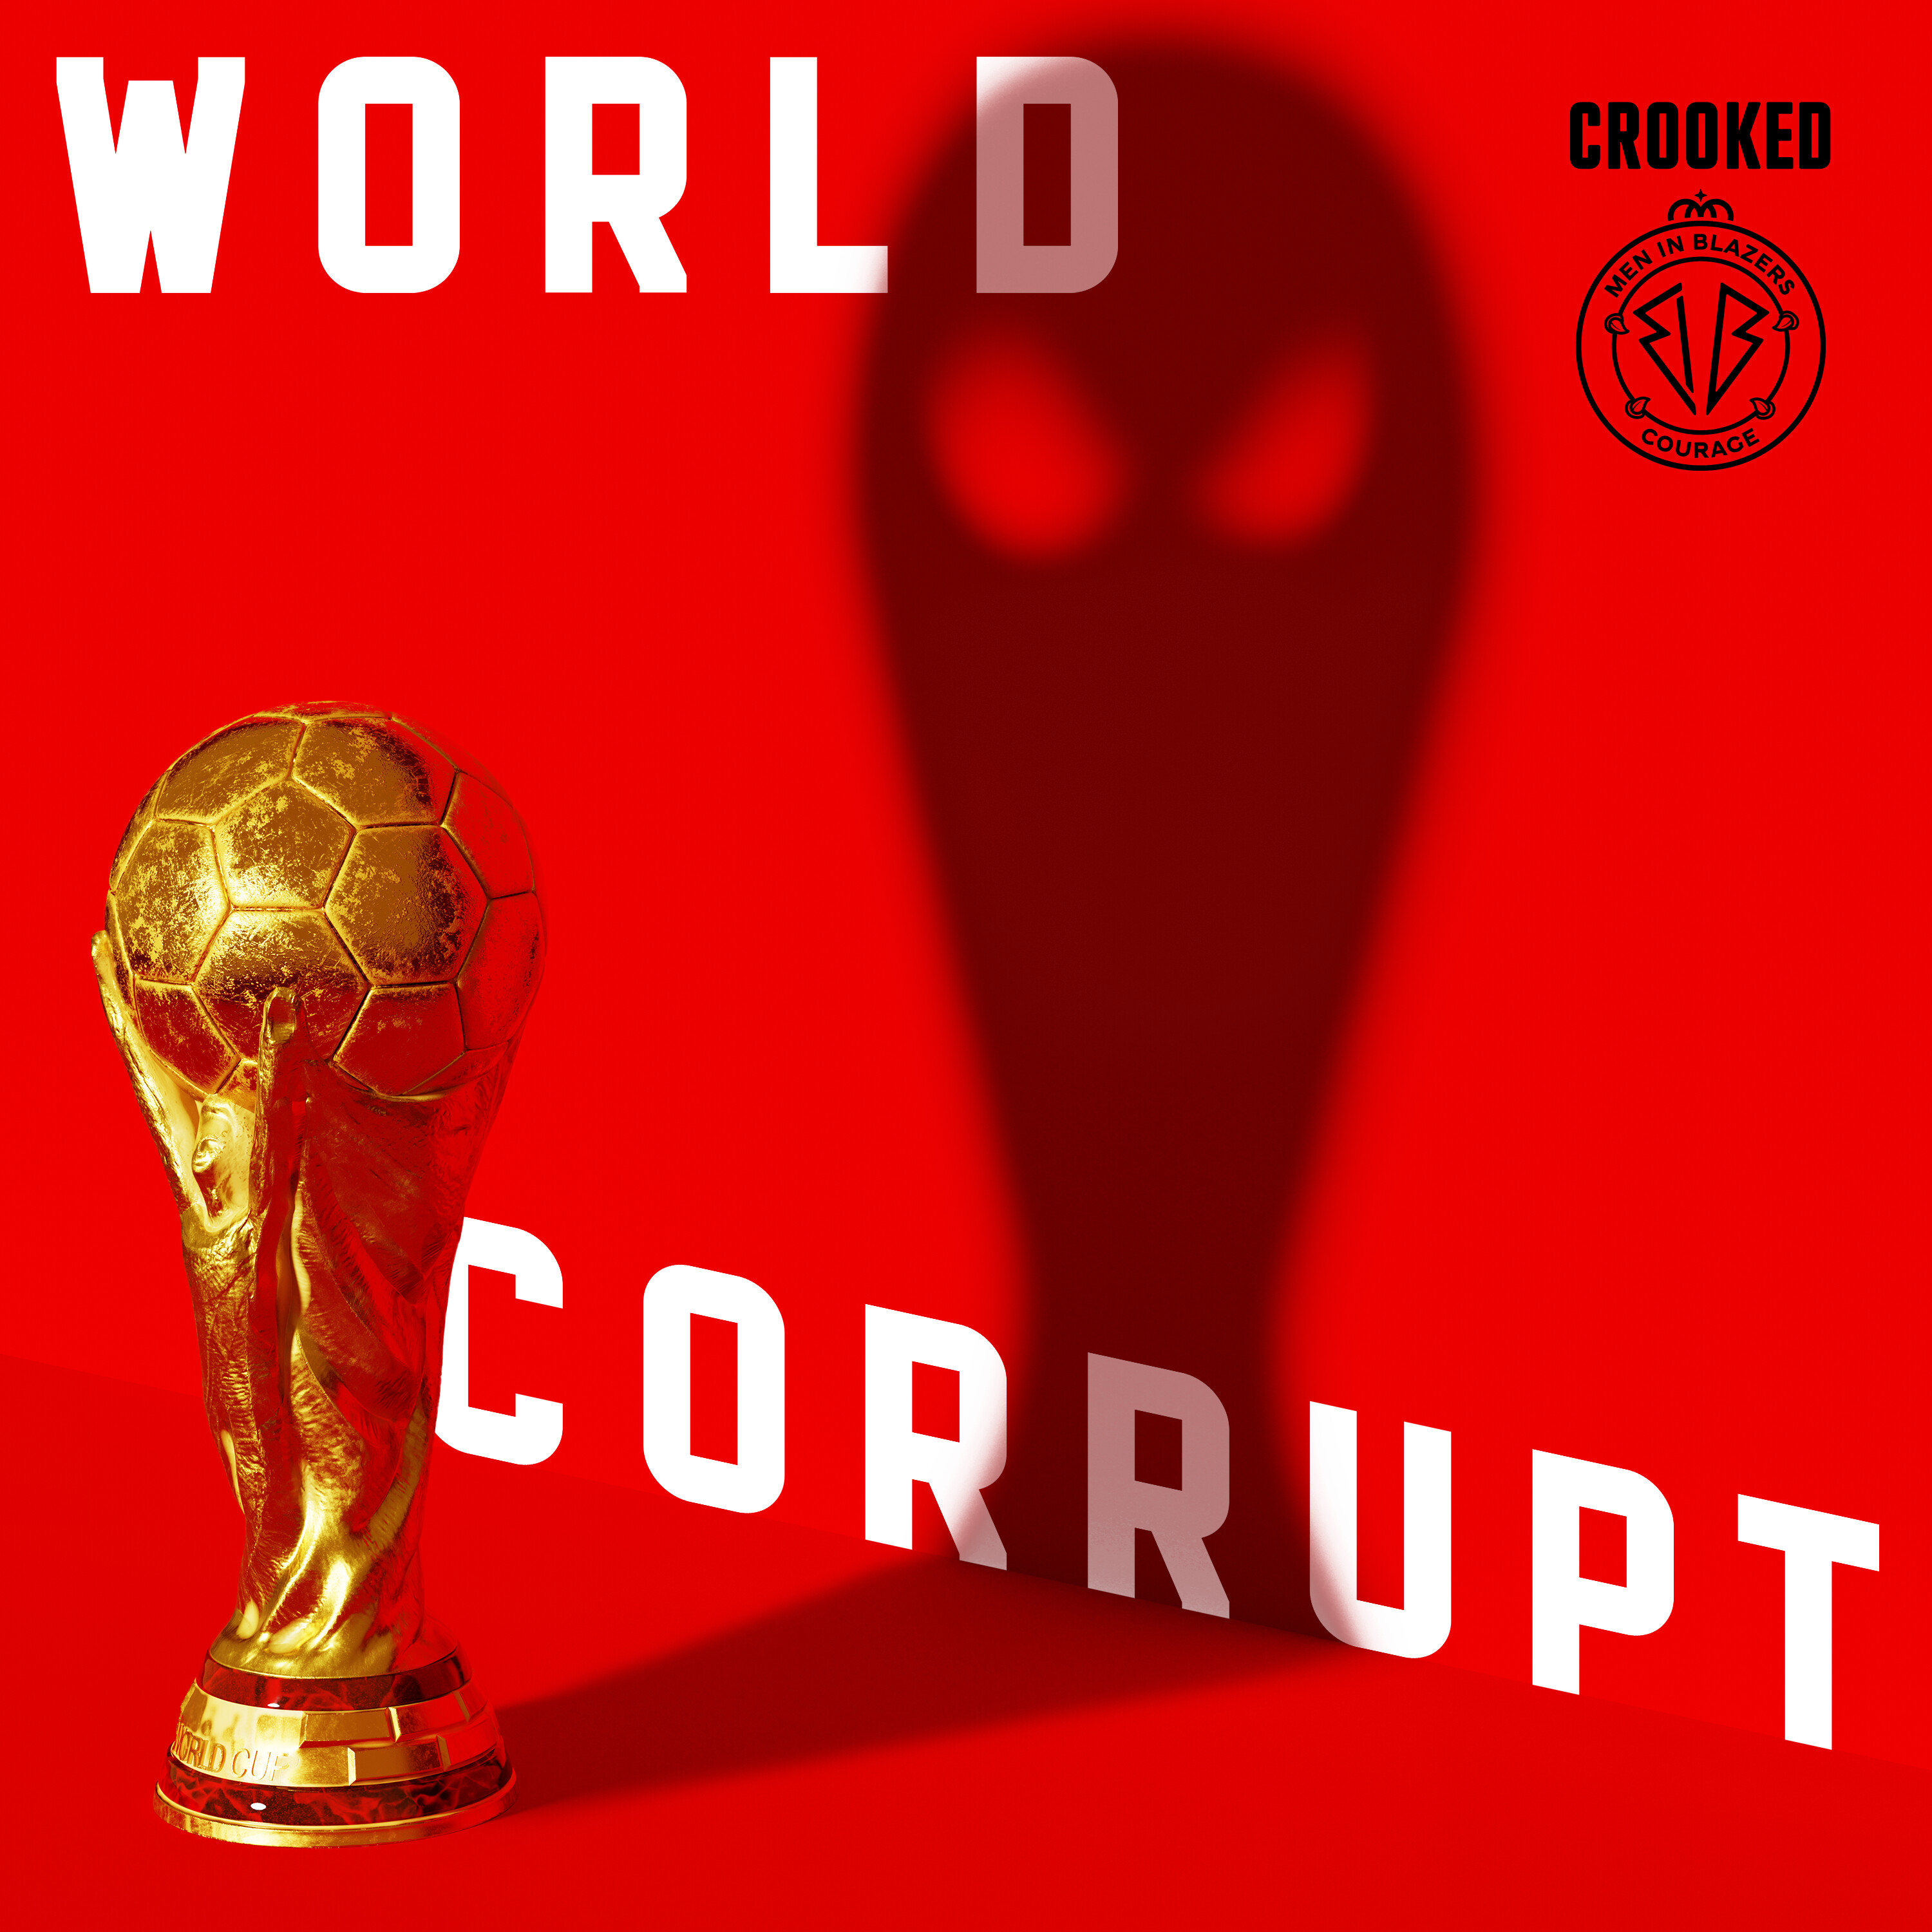 "World Corrupt" Trailer: MiB x Crooked Media